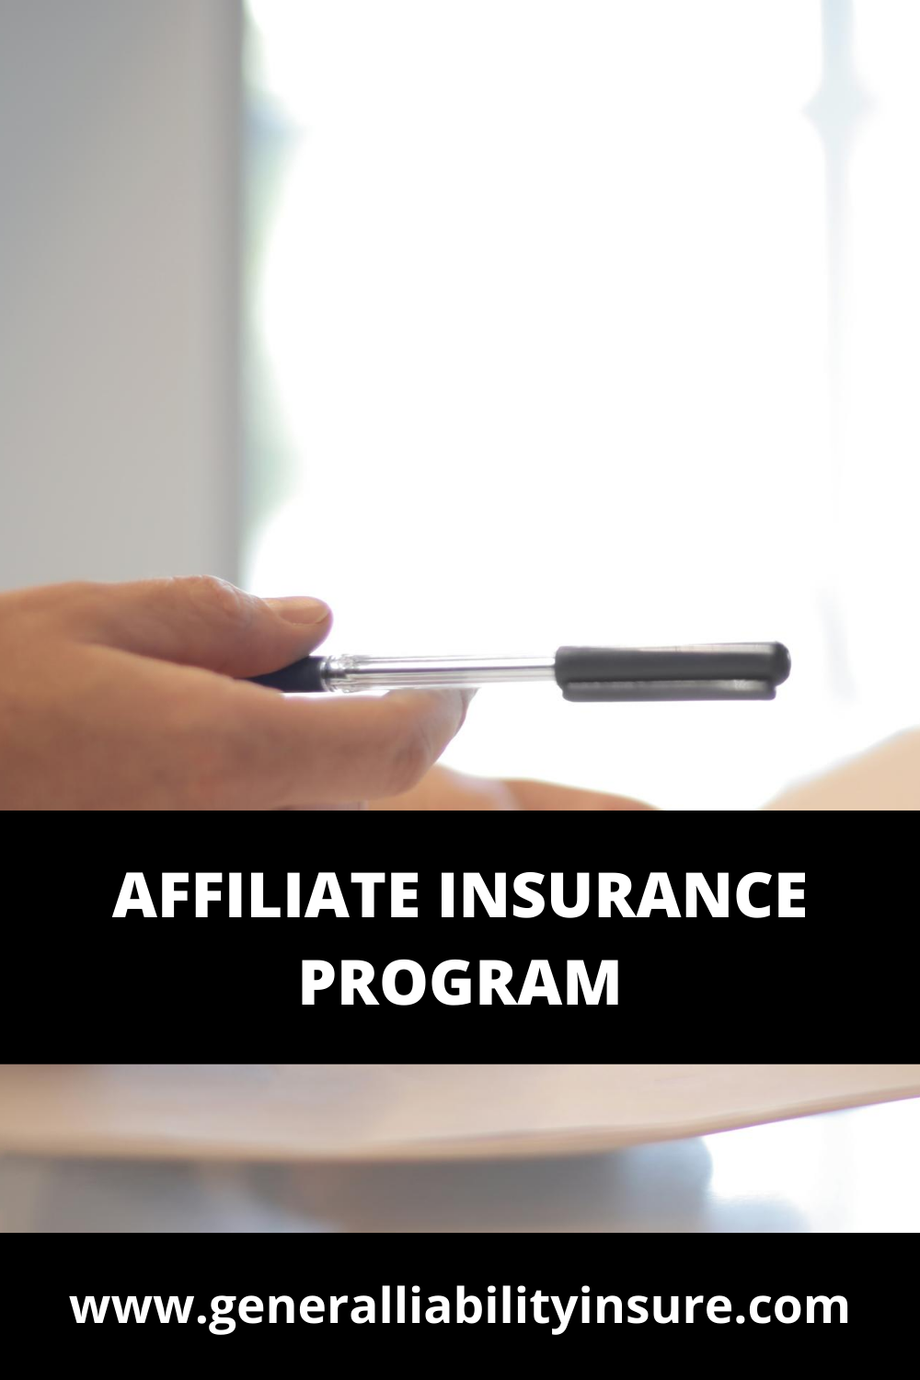 affiliateinsuranceprogram.png